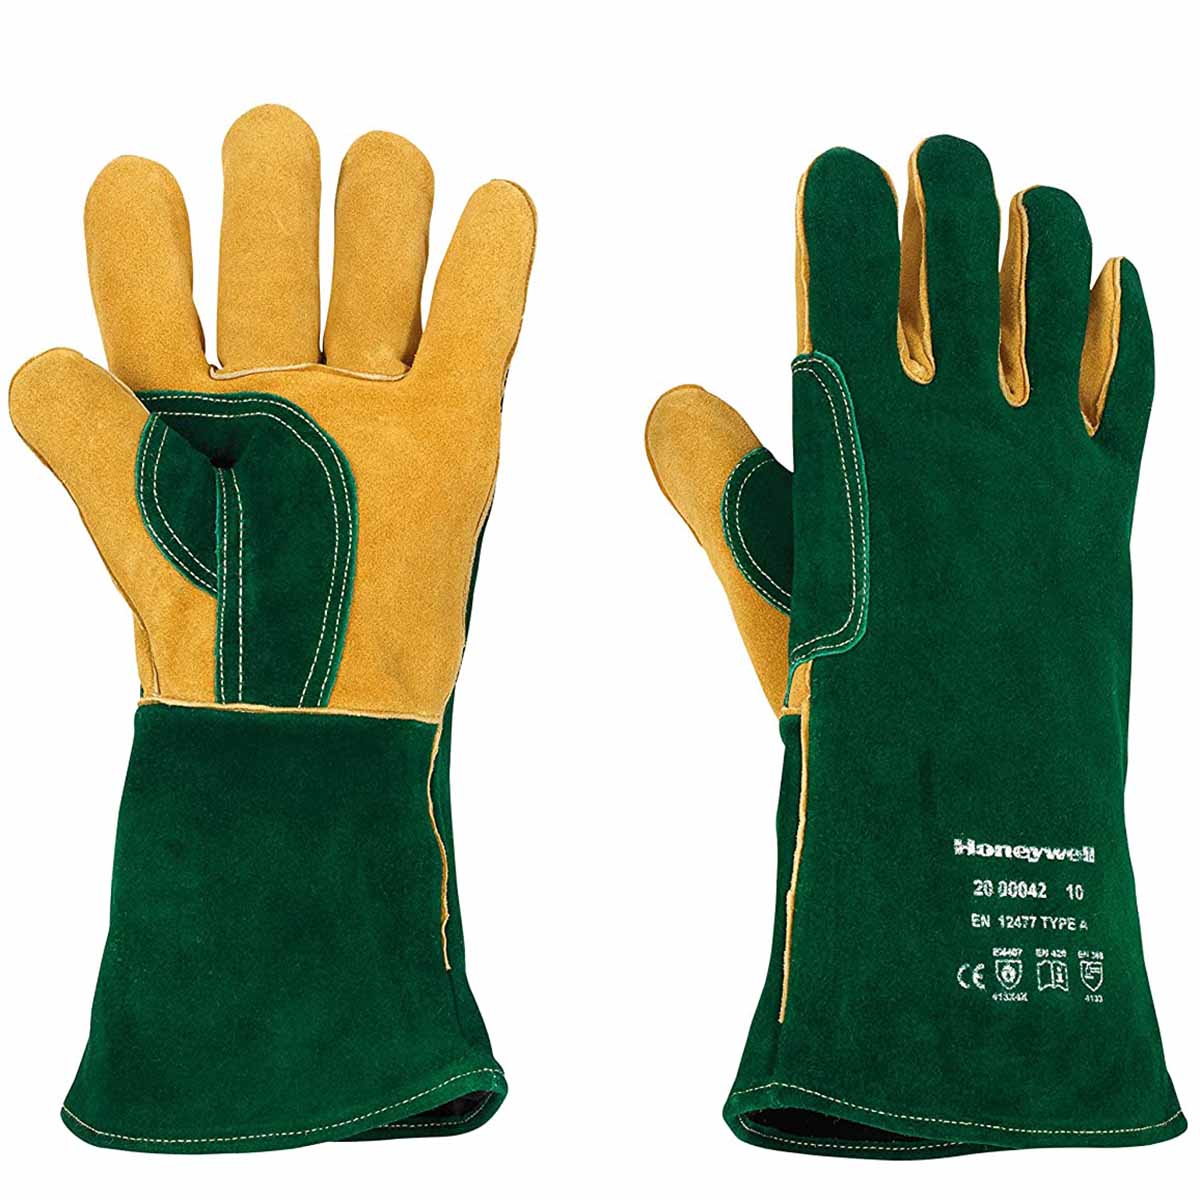 Honeywell 2000042 Green Welding Plus Gauntlet Gloves Size 10